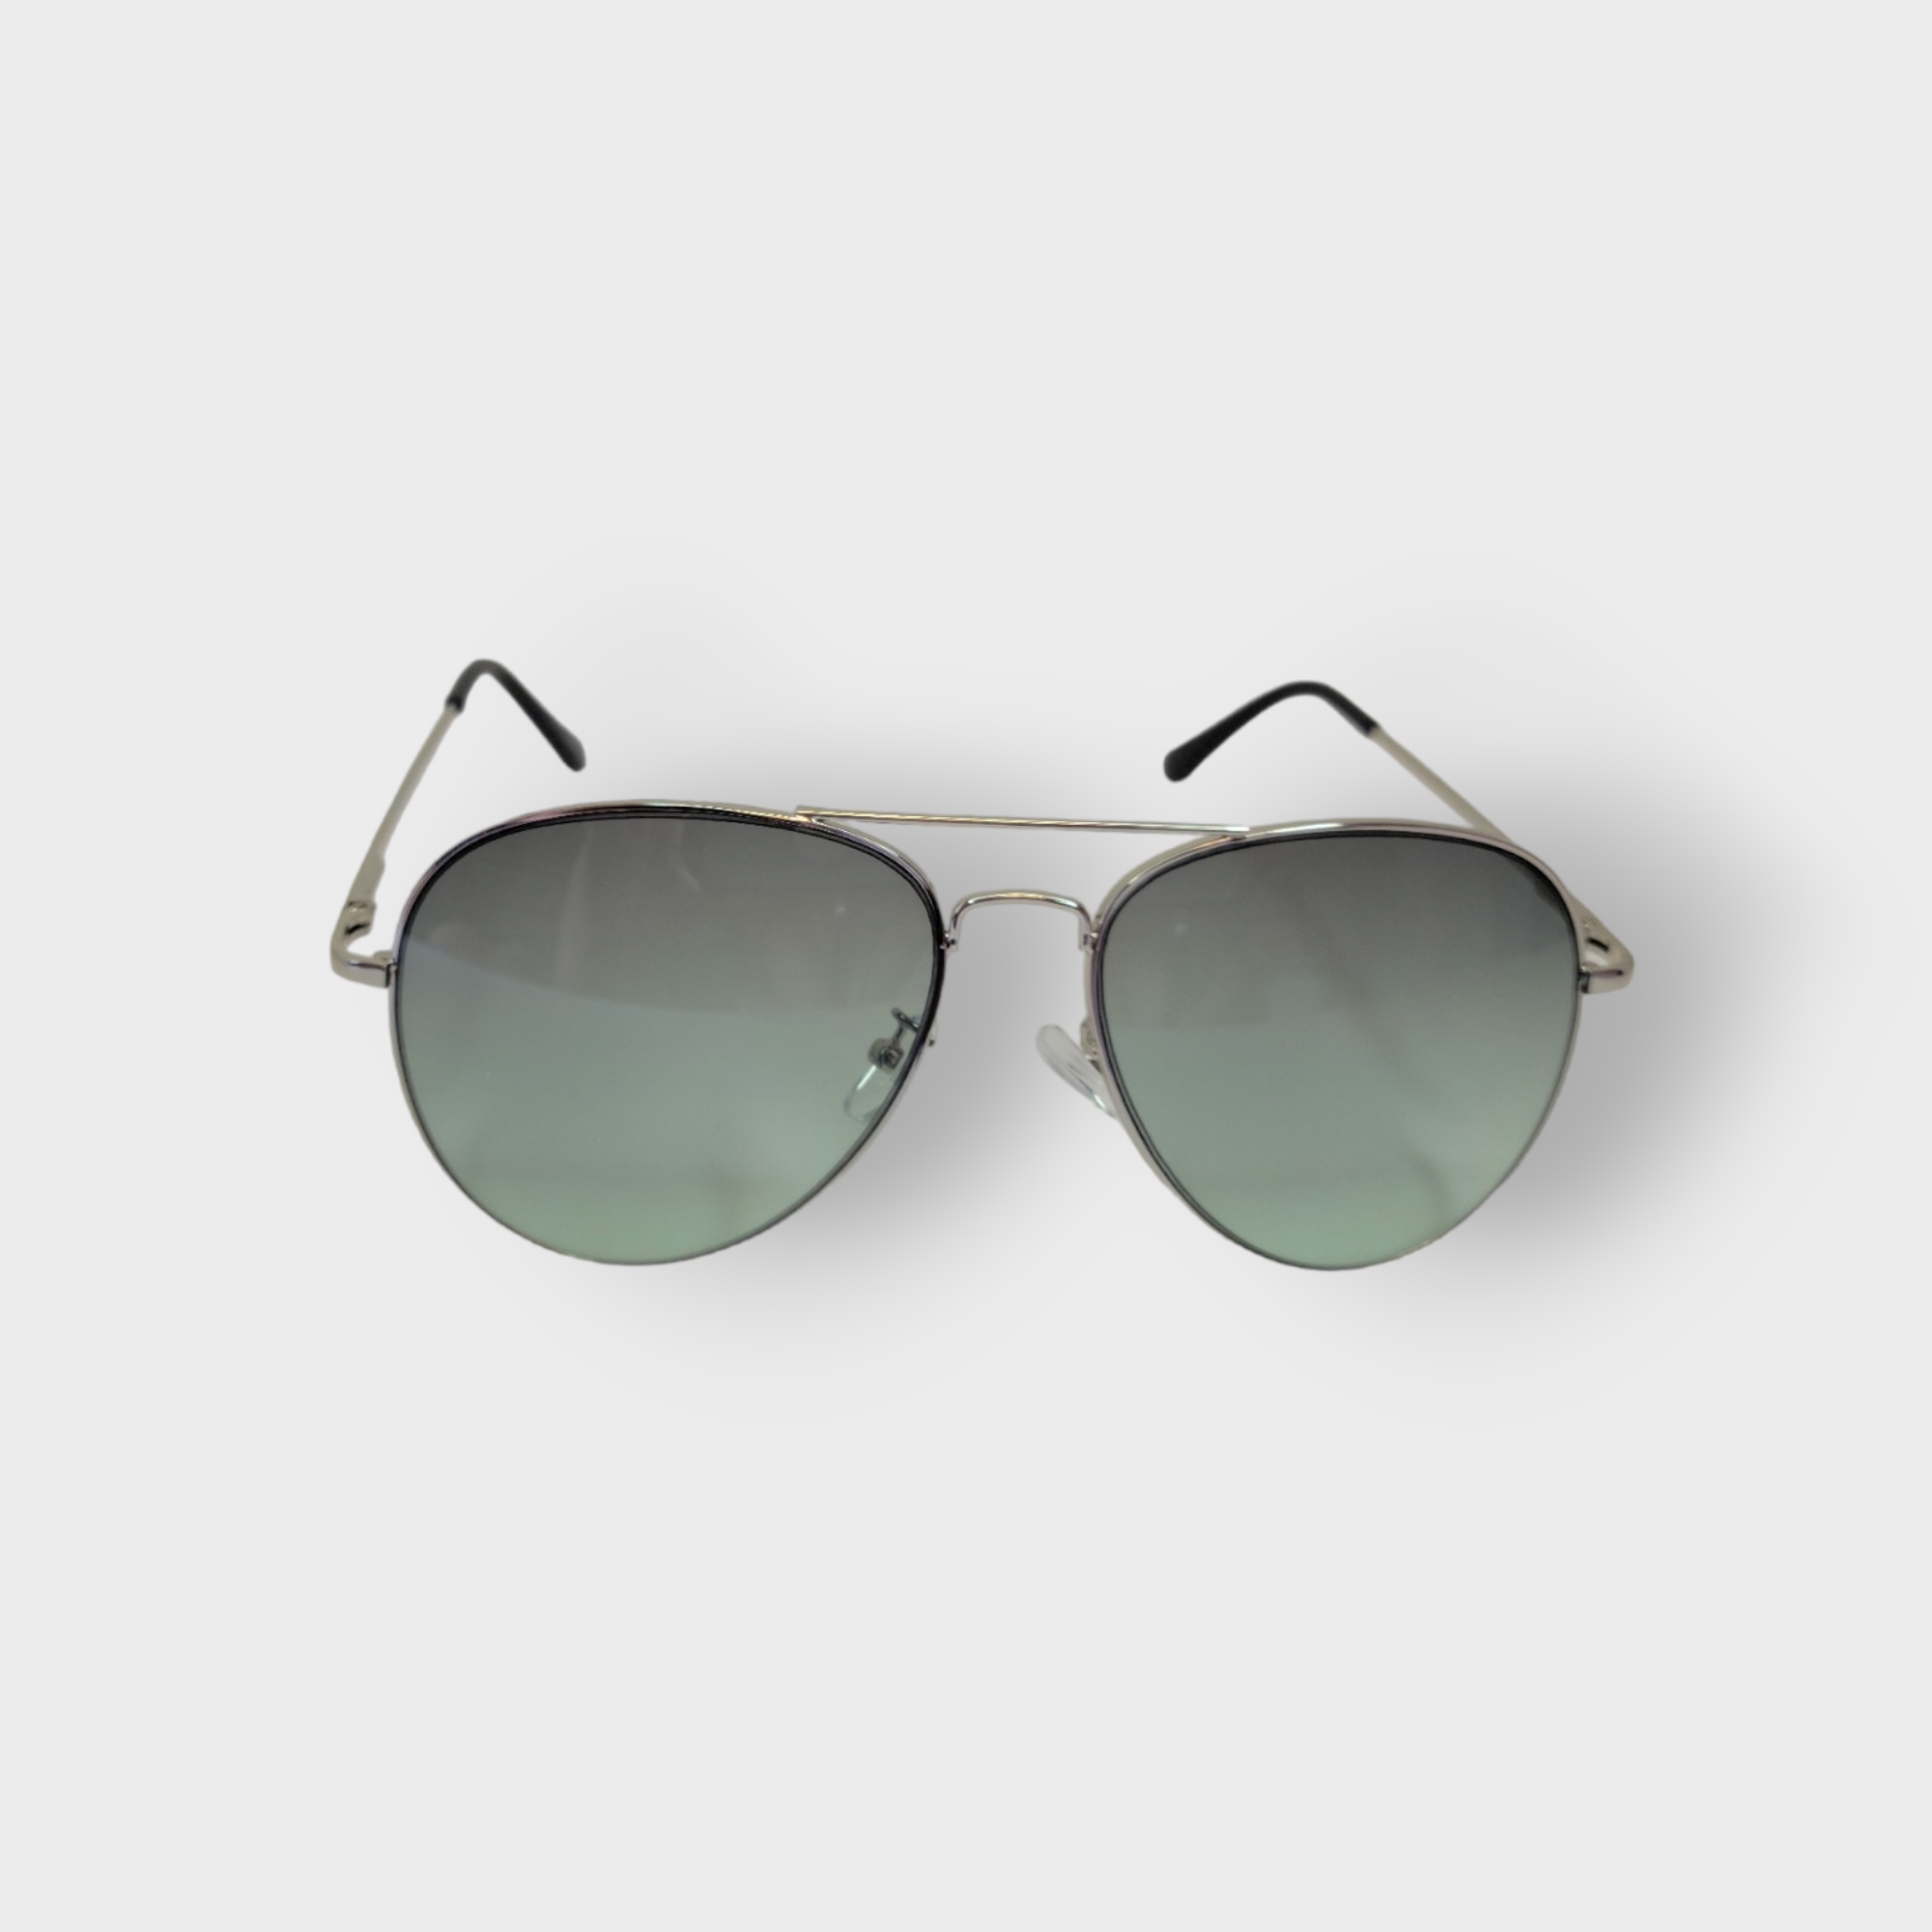 Discover more than 149 aviator sunglasses look super hot